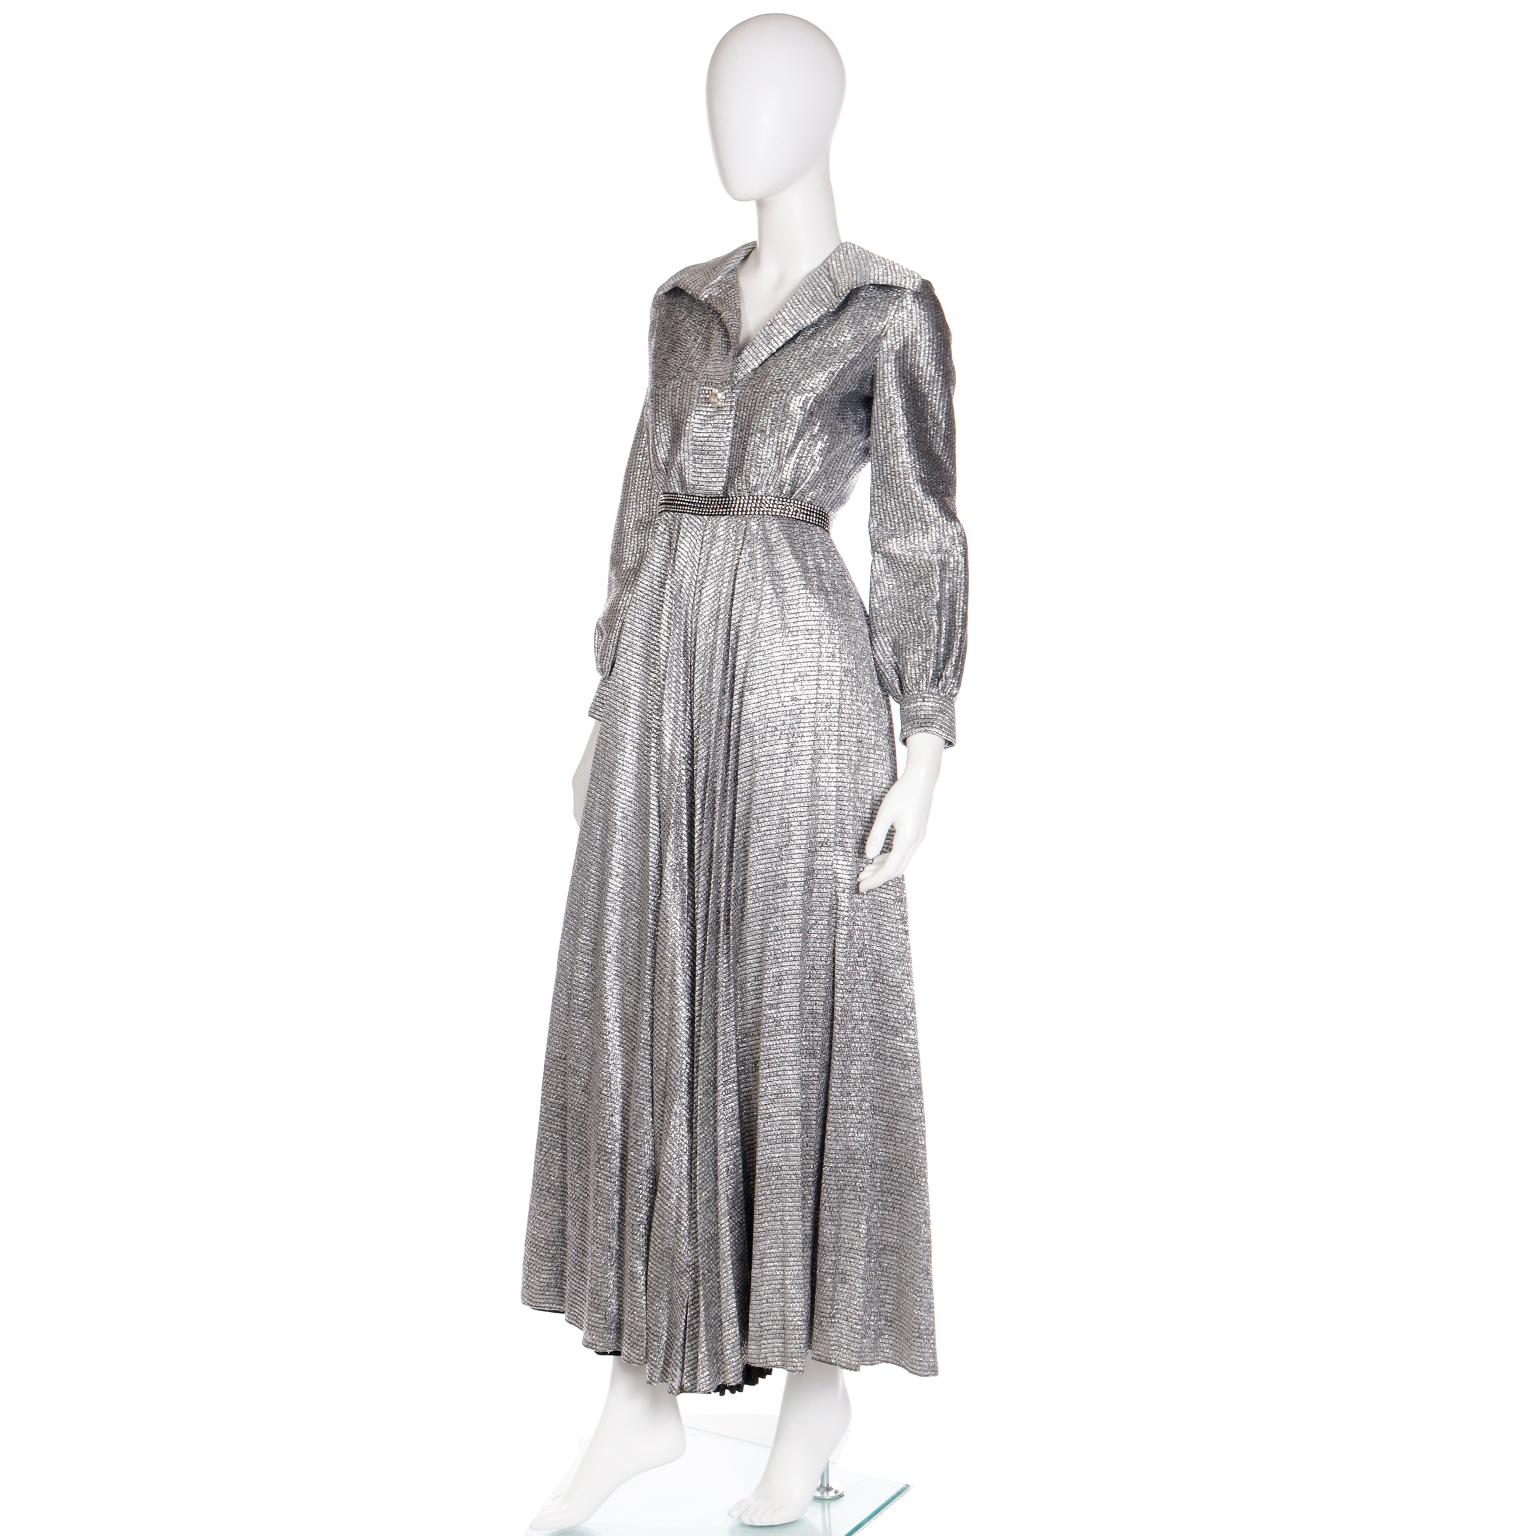 Vintage 1960s 1970s Silver Sparkle Palazzo Jumpsuit Evening Dress Alternative For Sale 4